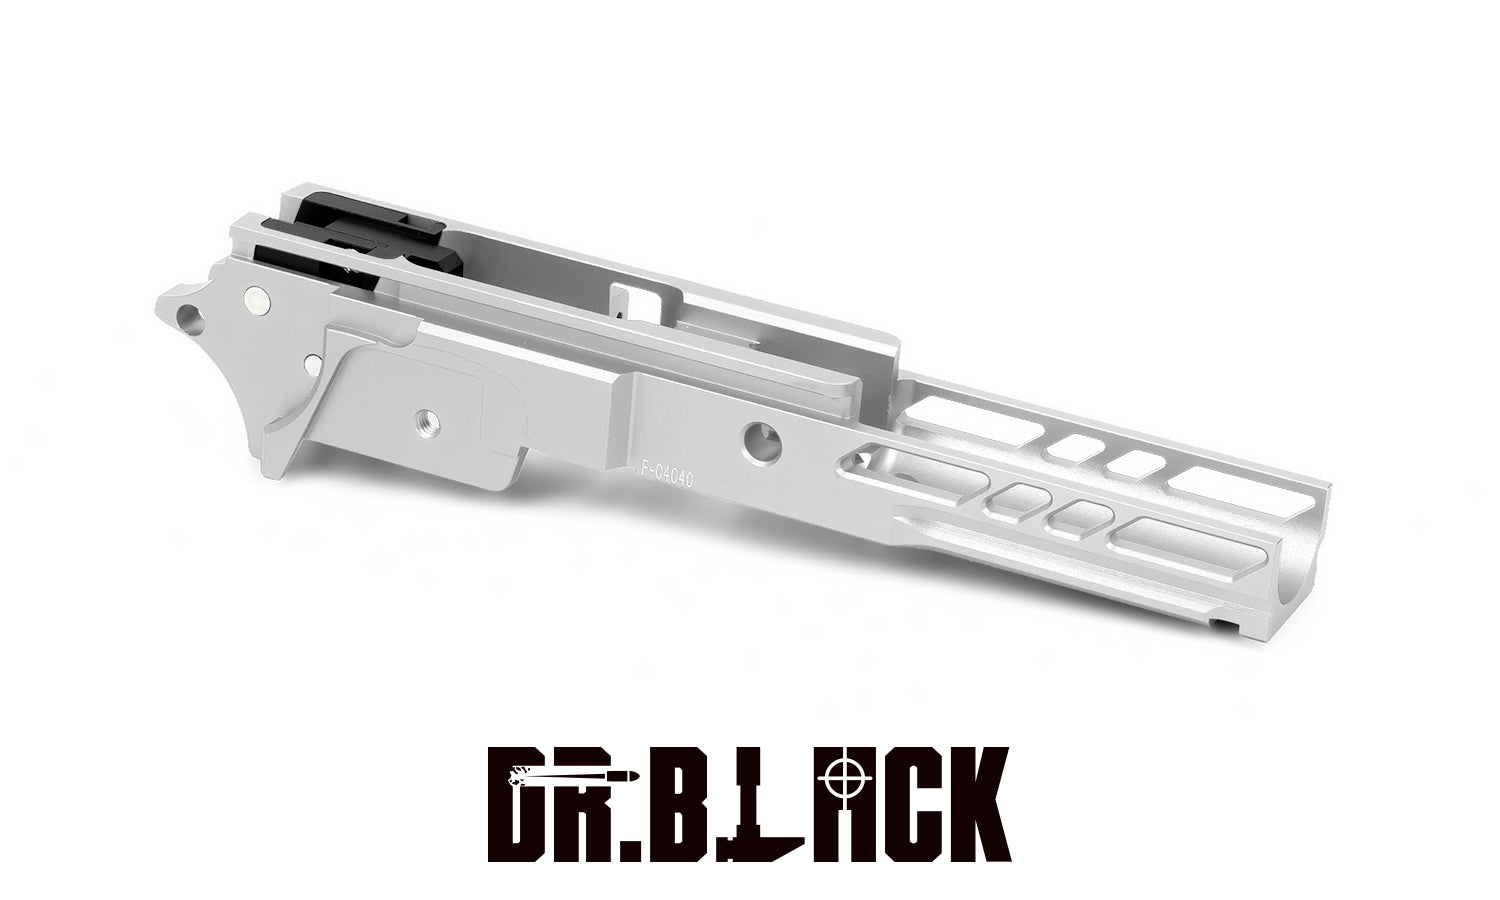 Dr. Black 3.9 Aluminum Frame – Type 4 (8 colors)